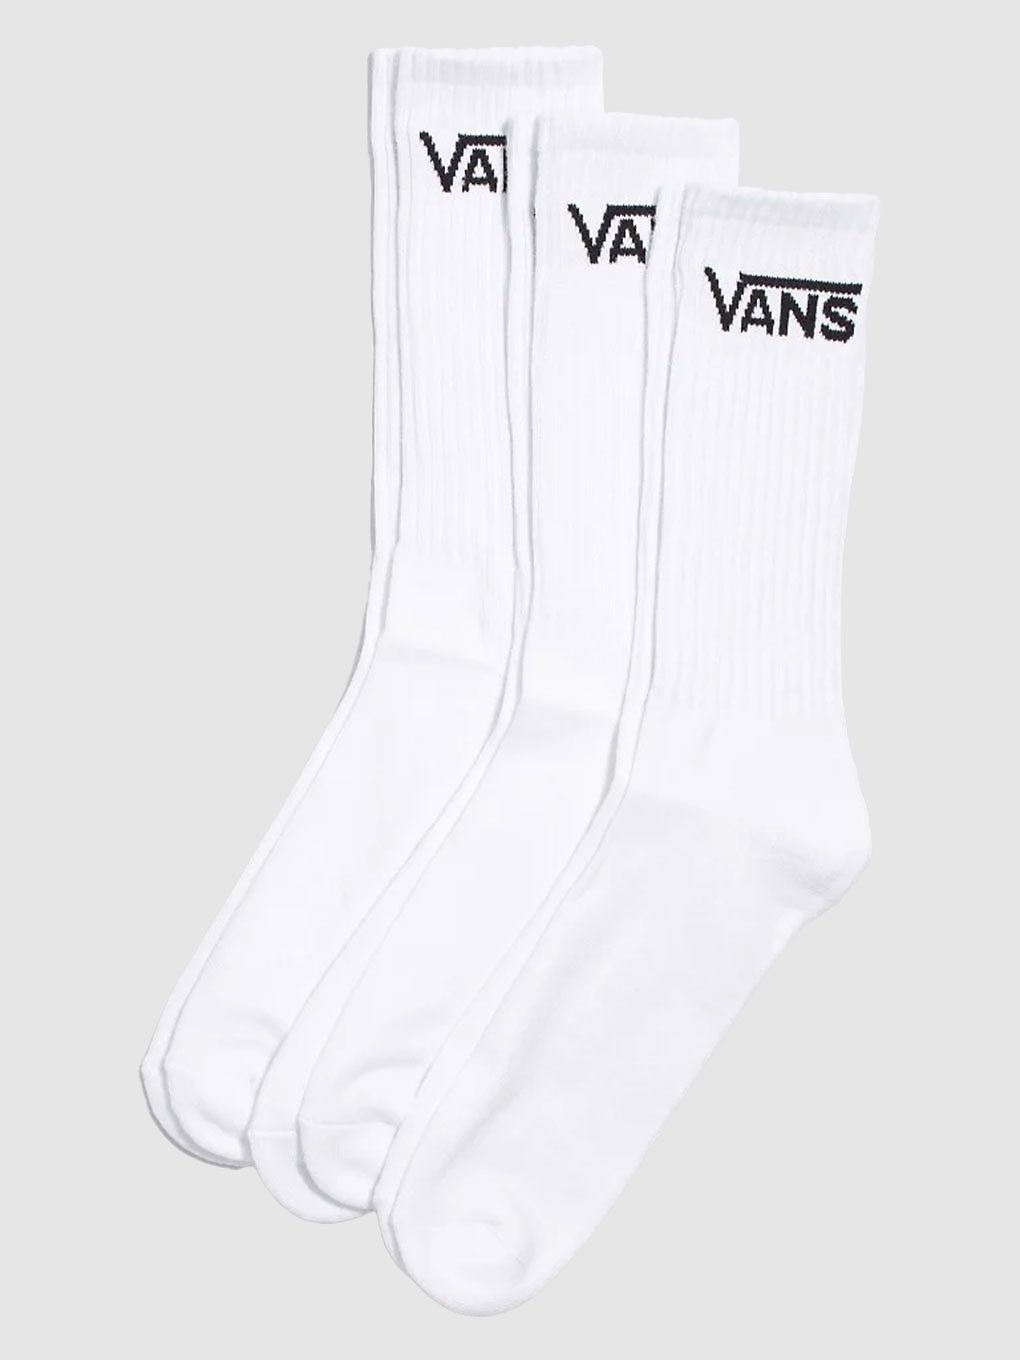 Vans Classic Crew 9.5-13 Socken rox white kaufen